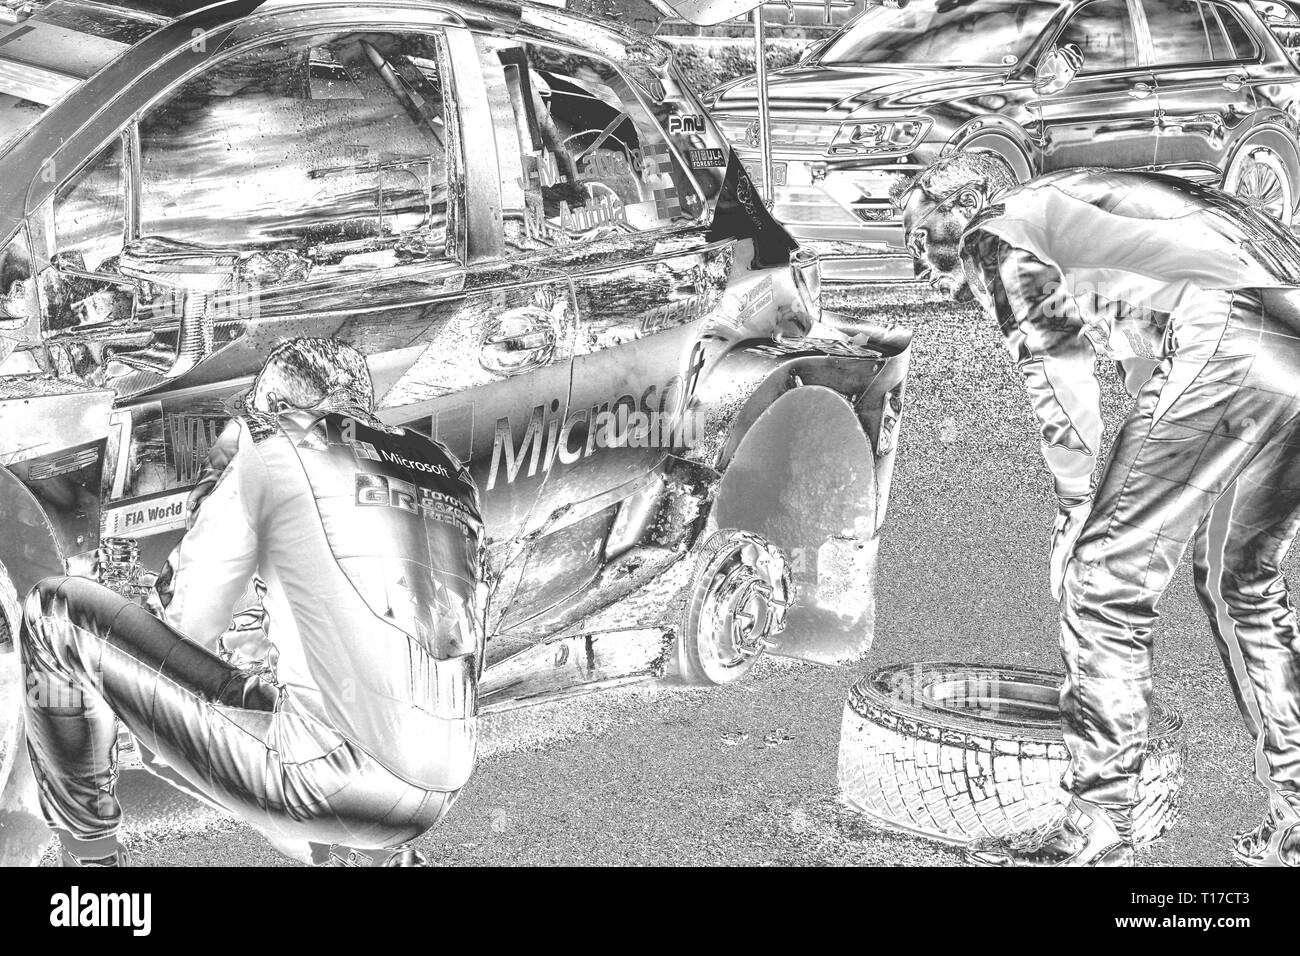 Cambrian Rally Llandudno, The chrome effect give an image a metallic look Stock Photo